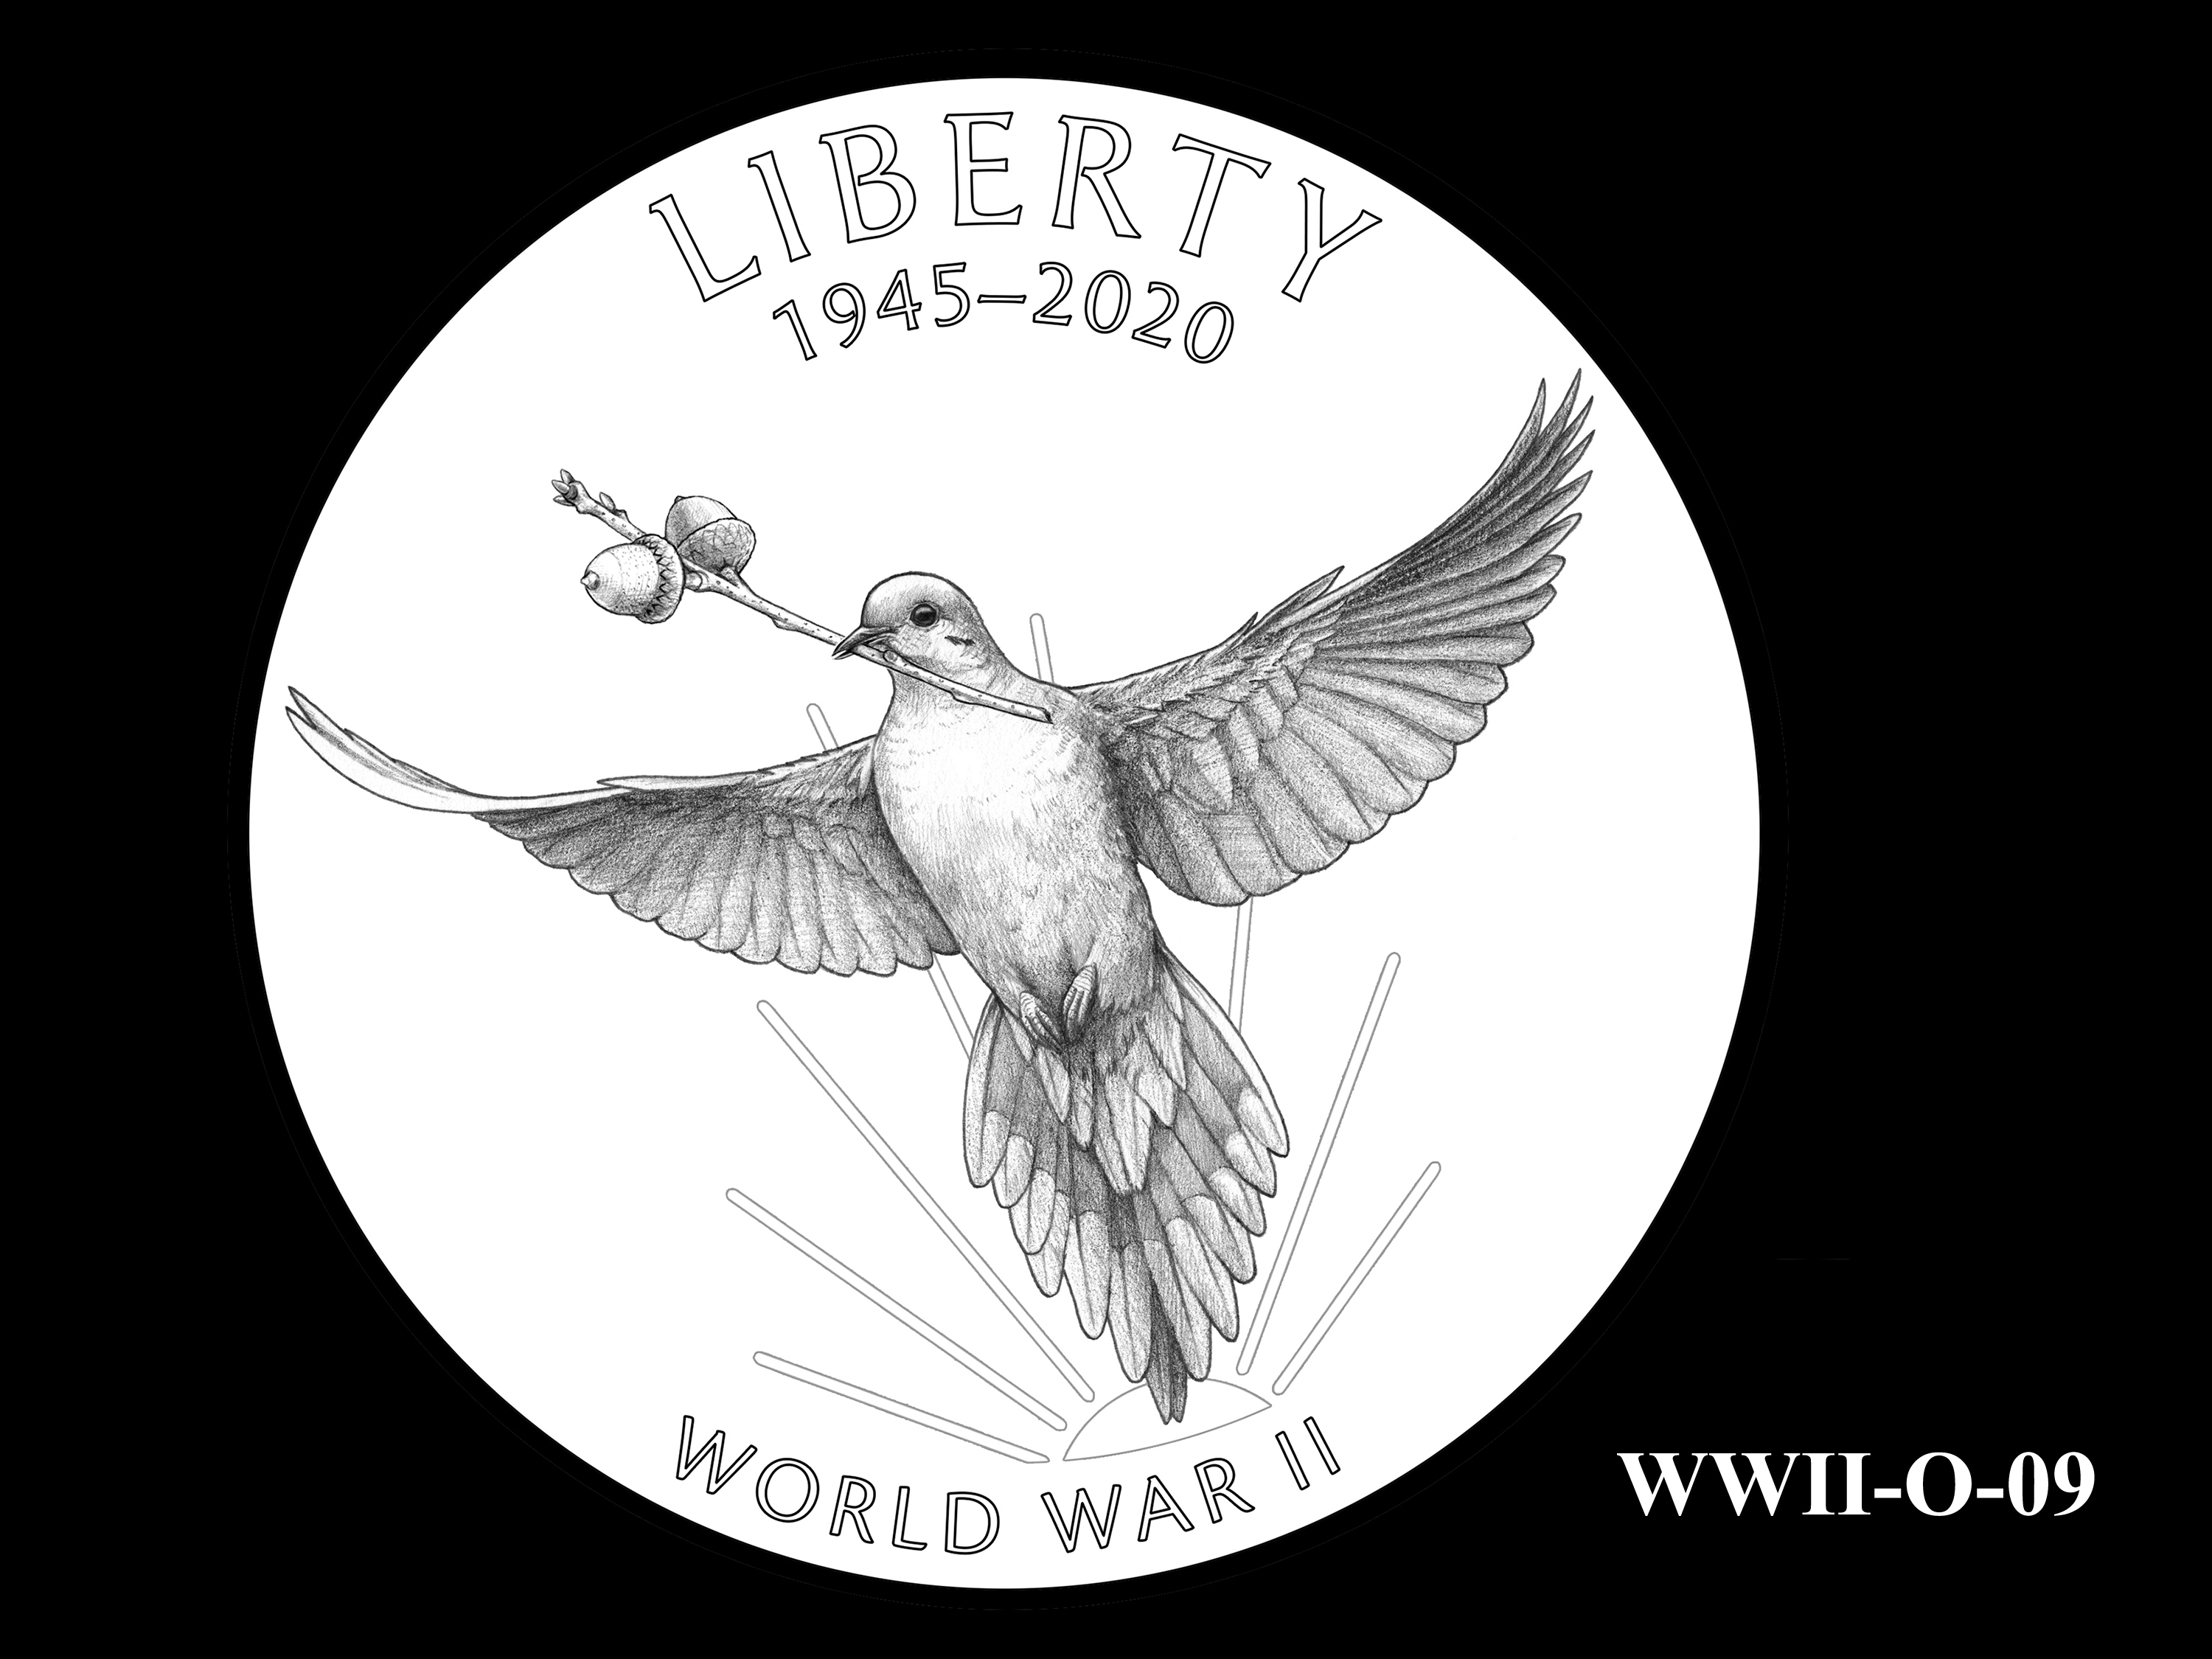 WWII-O-09 --End of World War II 75th Anniversary Program - Obverse